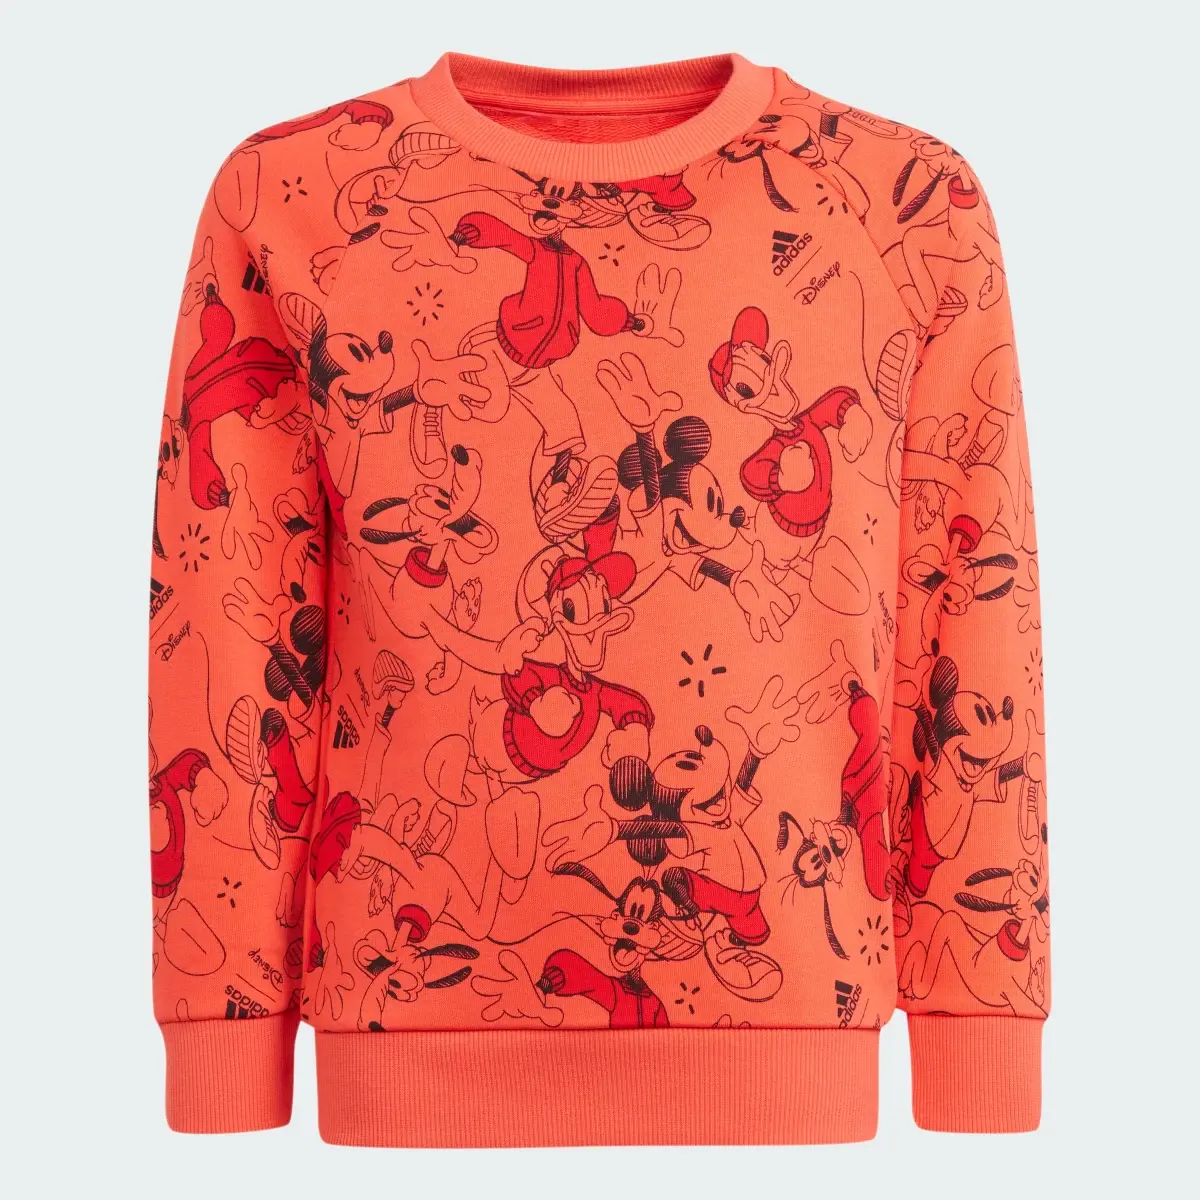 Adidas x Disney Mickey Mouse Sweatshirt. 1